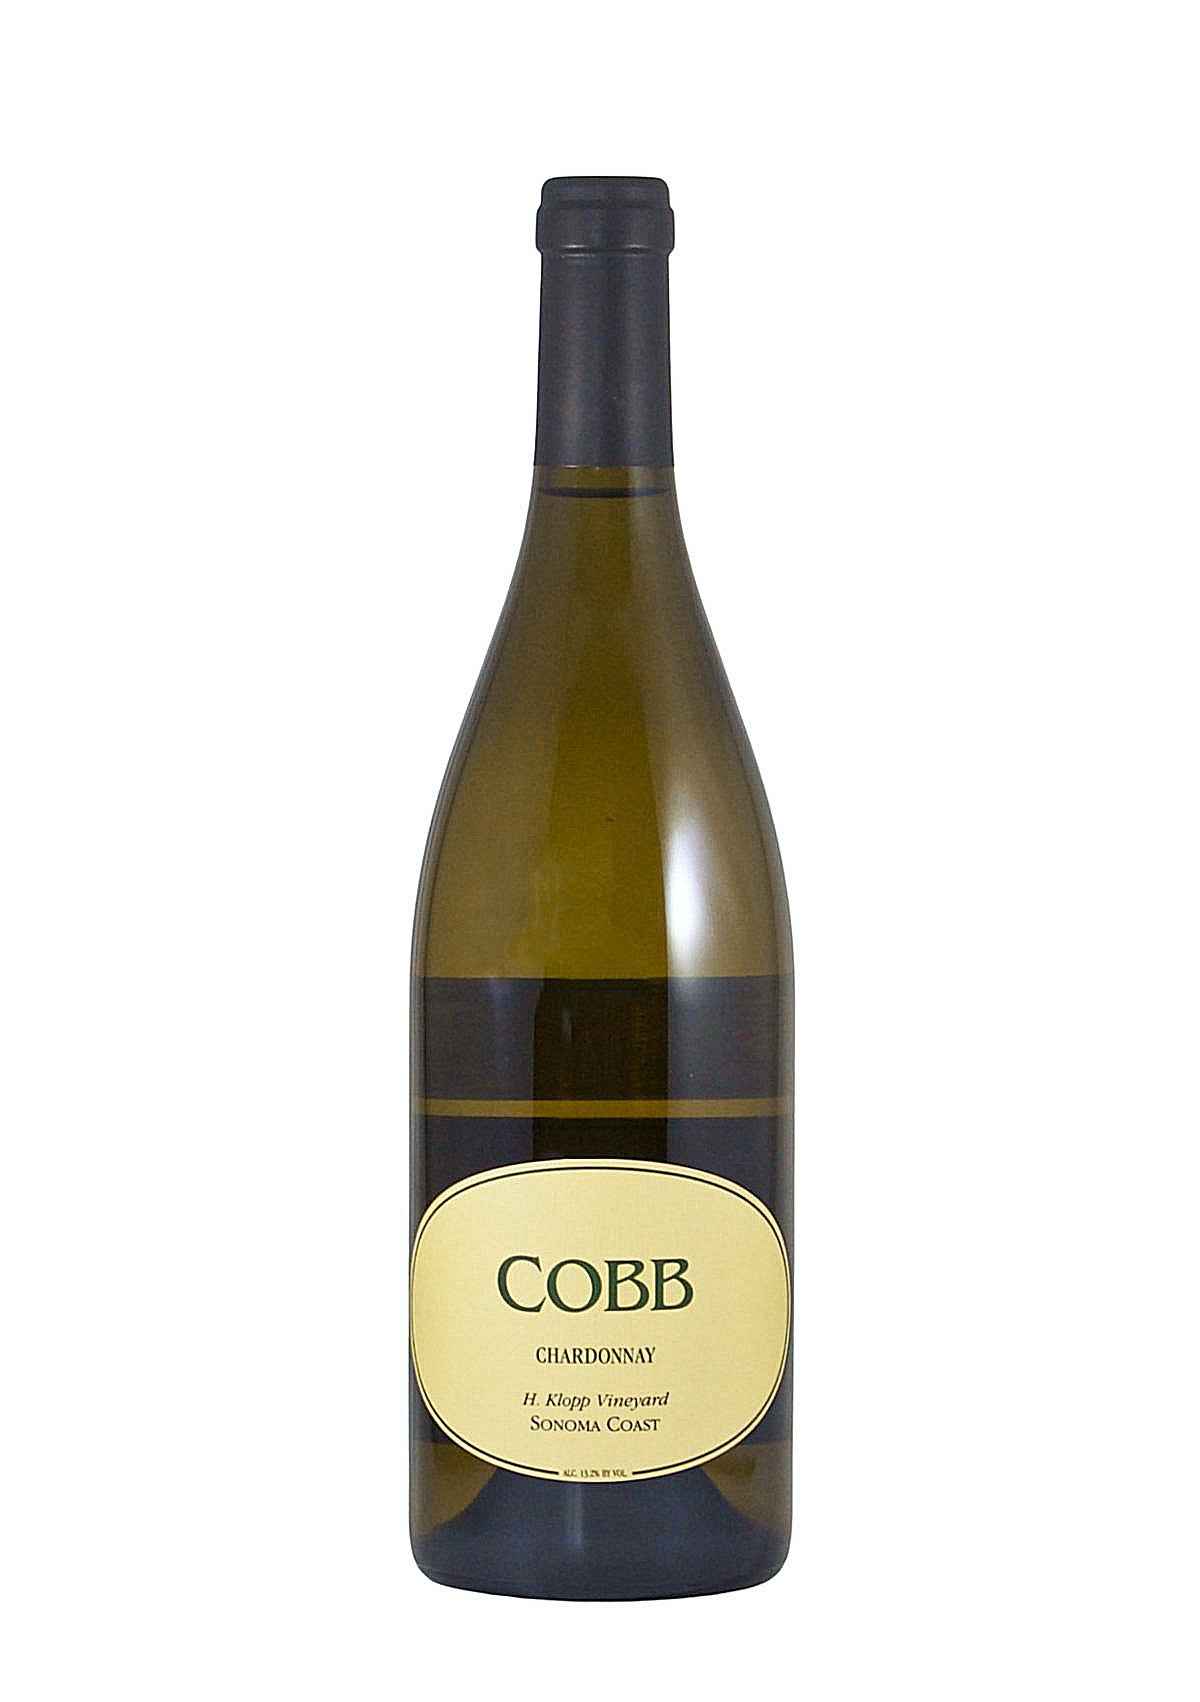 *9W* 2018 Cobb "H. Klopp Vineyard" Sonoma Coast Chardonnay (Sonoma, CA)